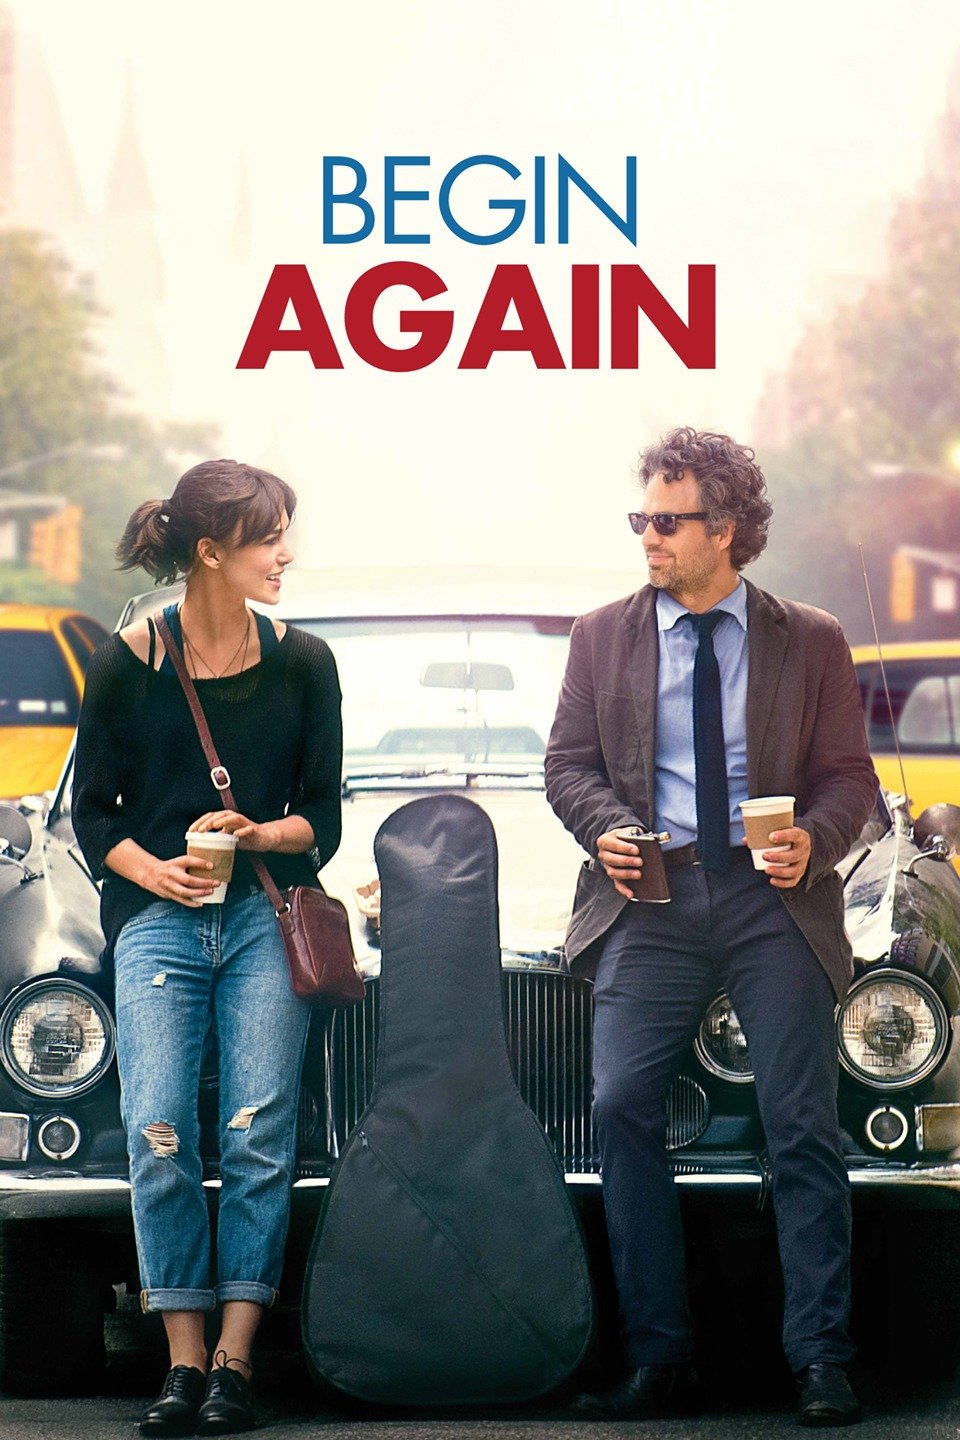 [MINI Suepr-HQ] Begin Again (2013) เพราะรักคือเพลงรัก [1080p] [พากย์ไทย 5.1 + เสียงอังกฤษ DTS] [บรรยายไทย + อังกฤษ] [เสียงไทย + ซับไทย] [OPENLOAD]